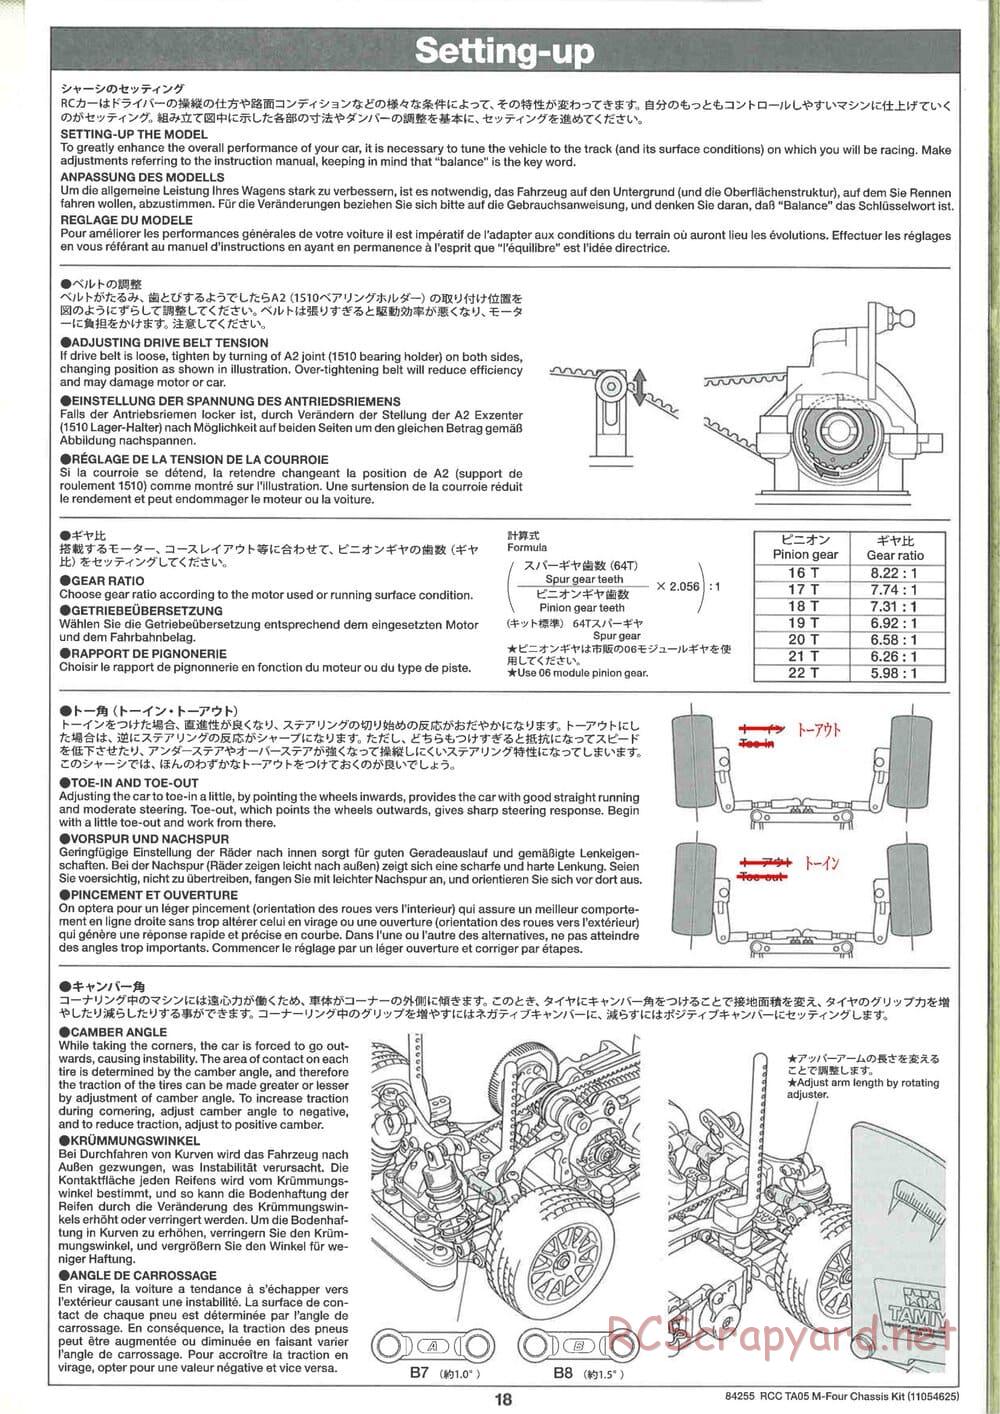 Tamiya - TA05 M-Four Chassis - Manual - Page 18